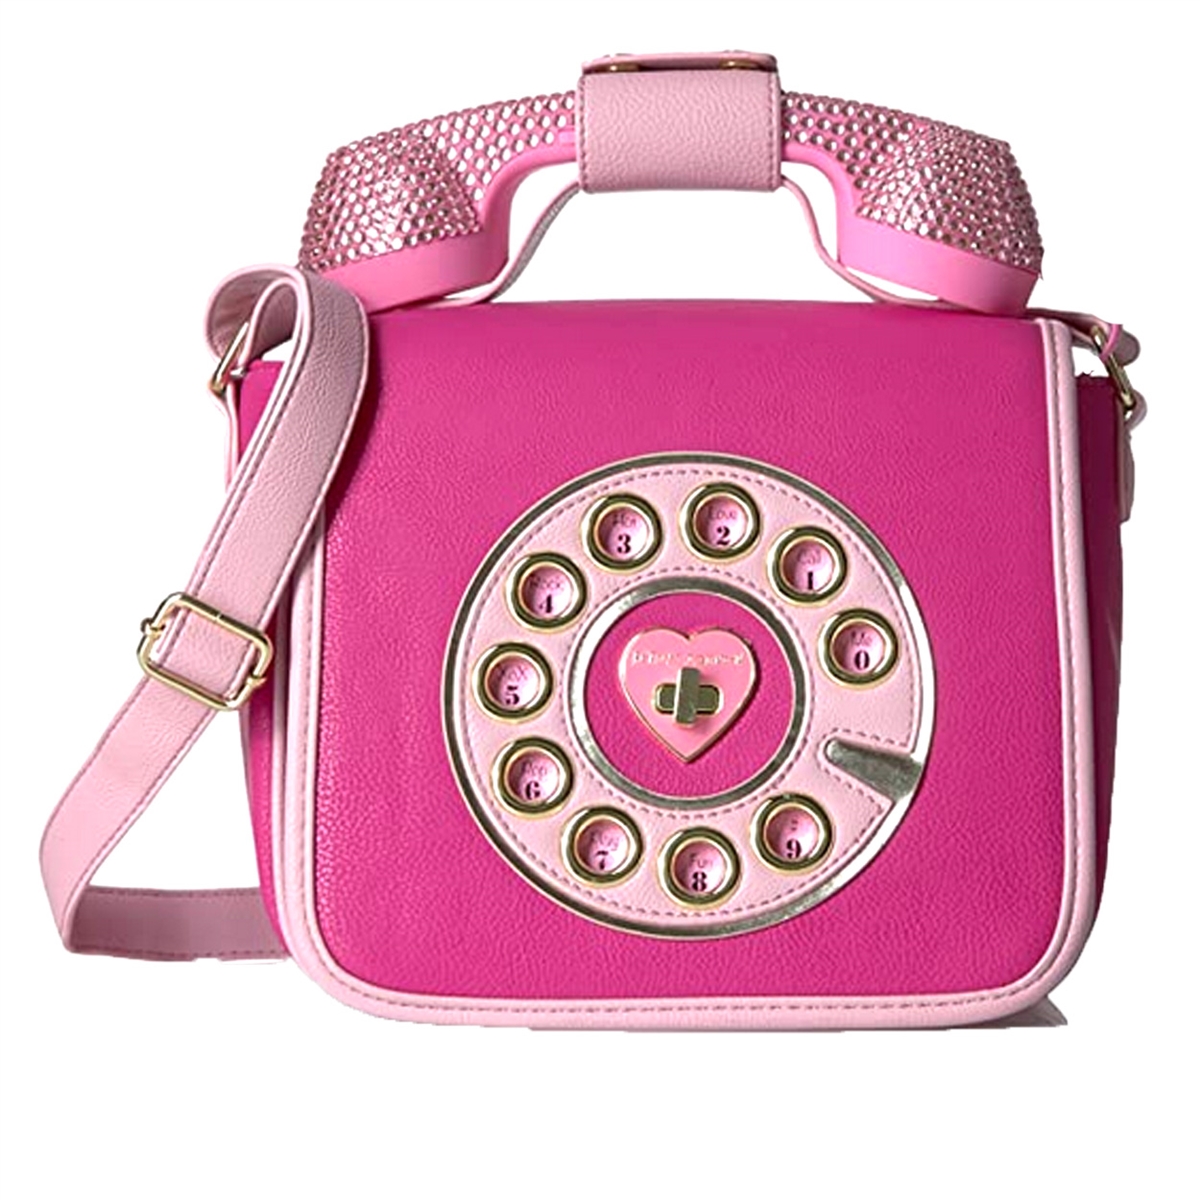 Buy Betsey Johnson Phone Bag Cross Body Handbag,Stripe at Amazon.in